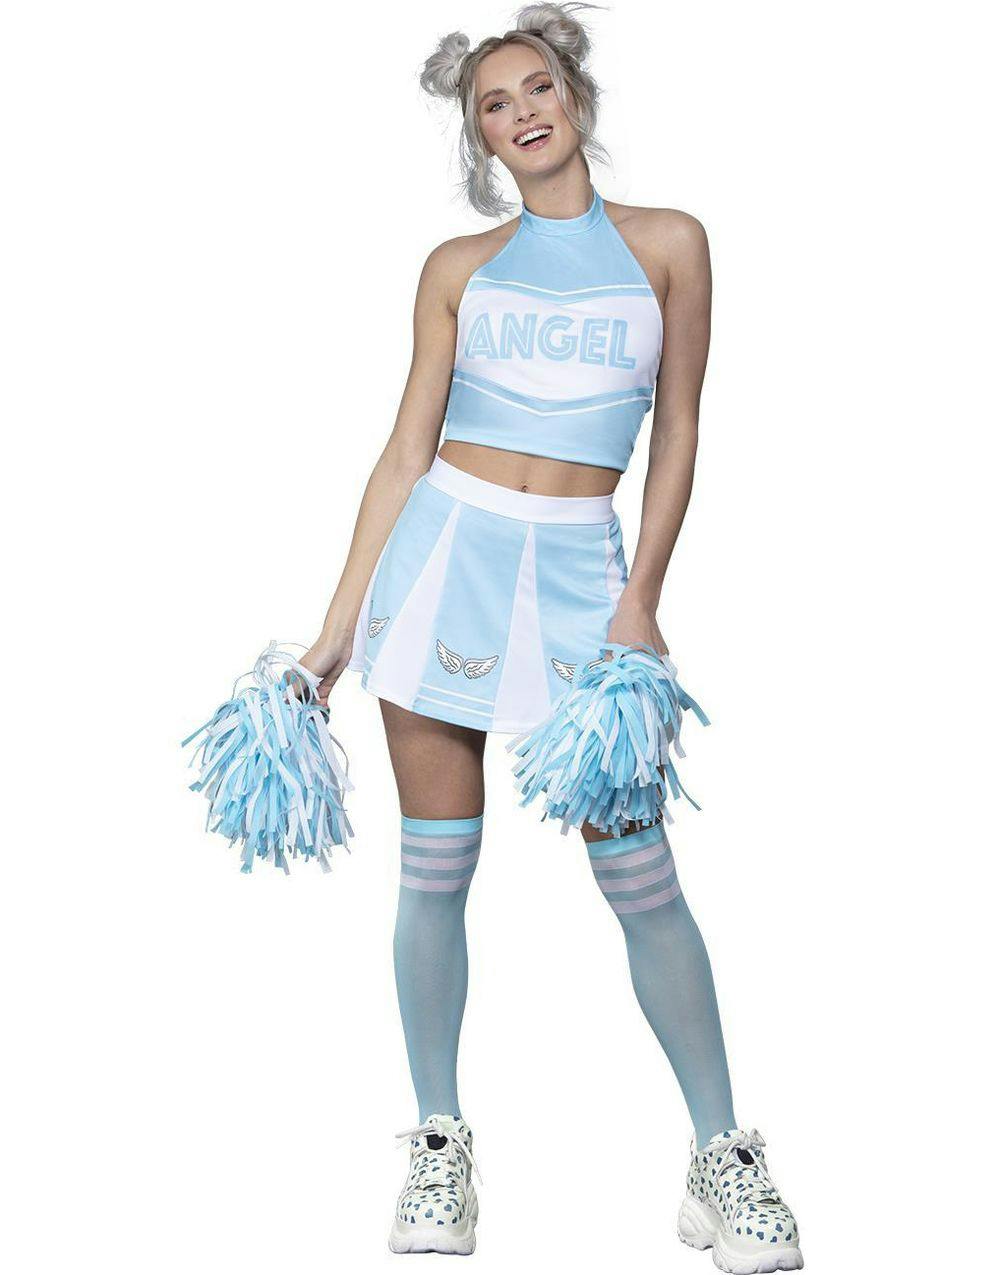 Angel - Blåt Hvidt Cheerleaderkostume Dame - Cheerleader - Sport - Kostumer efter Tema Kostumer - KARNEVAL